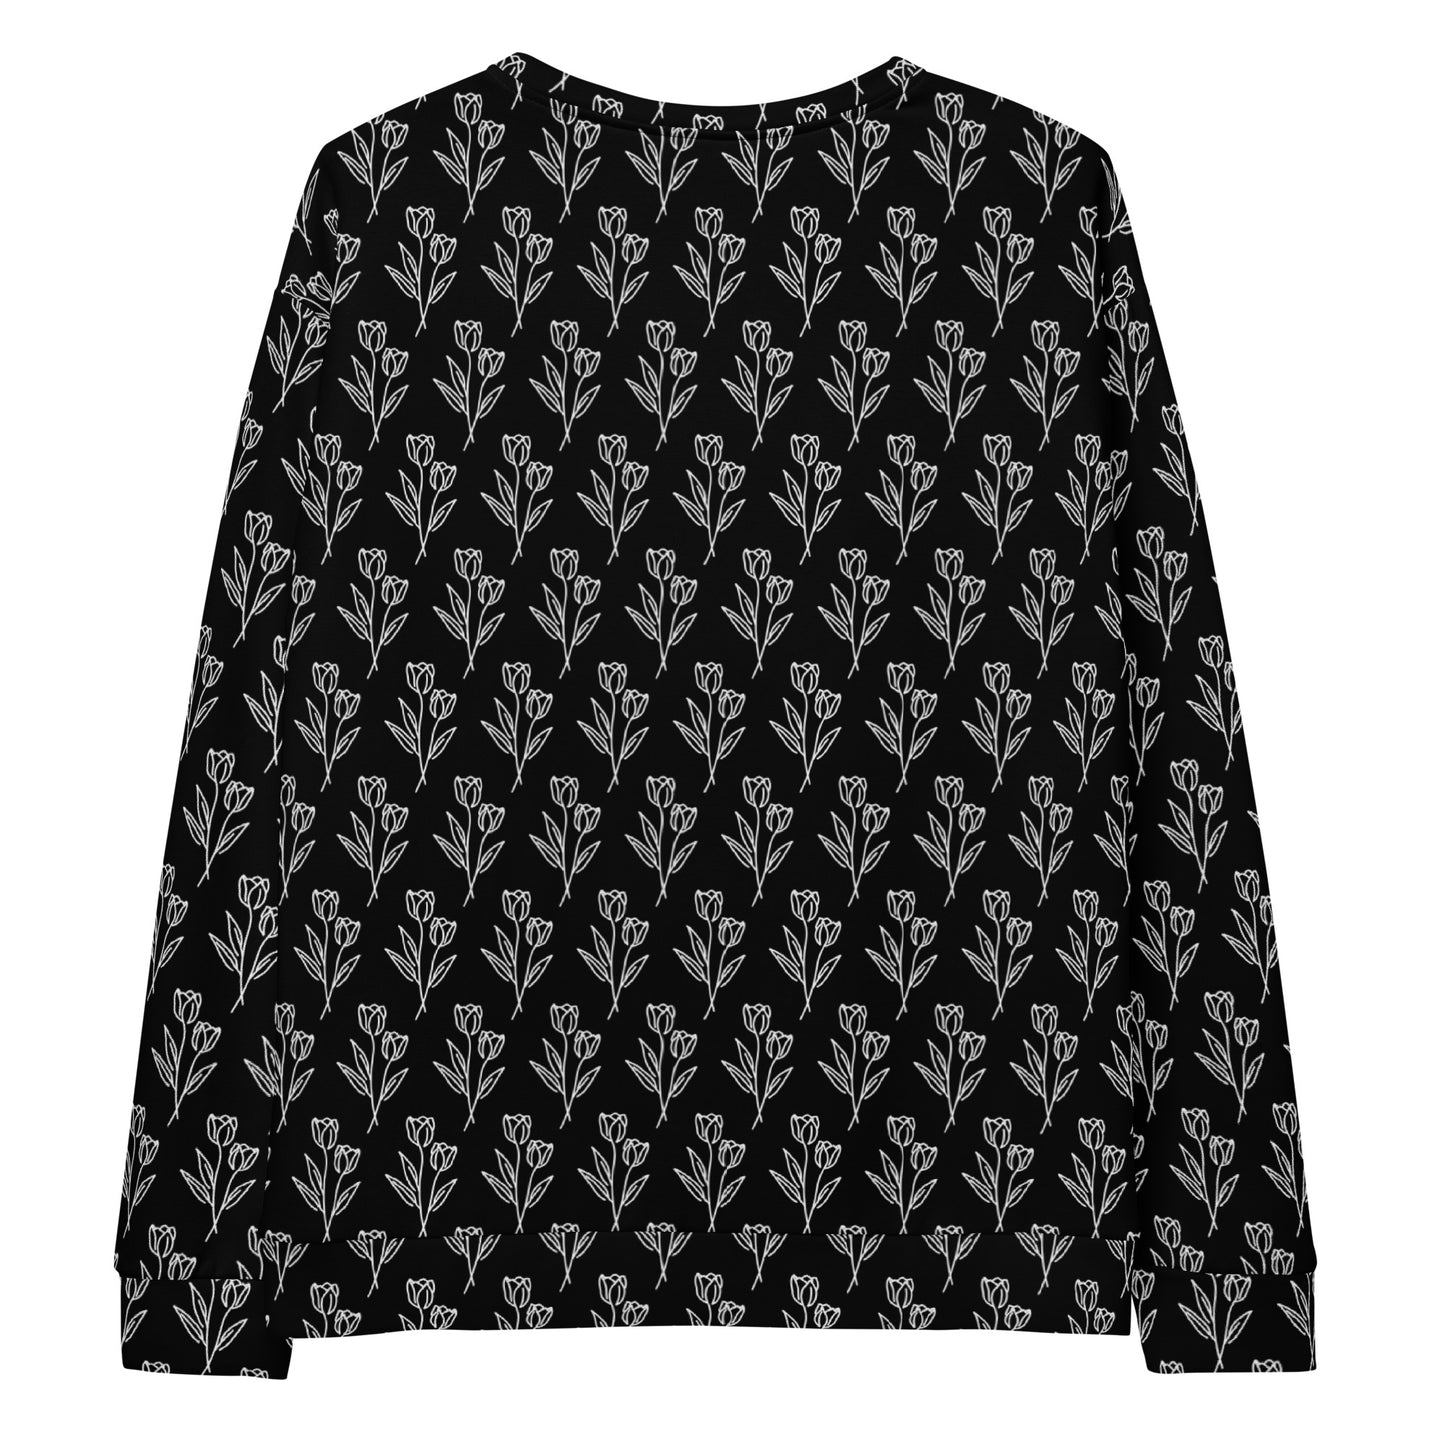 Unisex Sweatshirt with tulip tattoo print